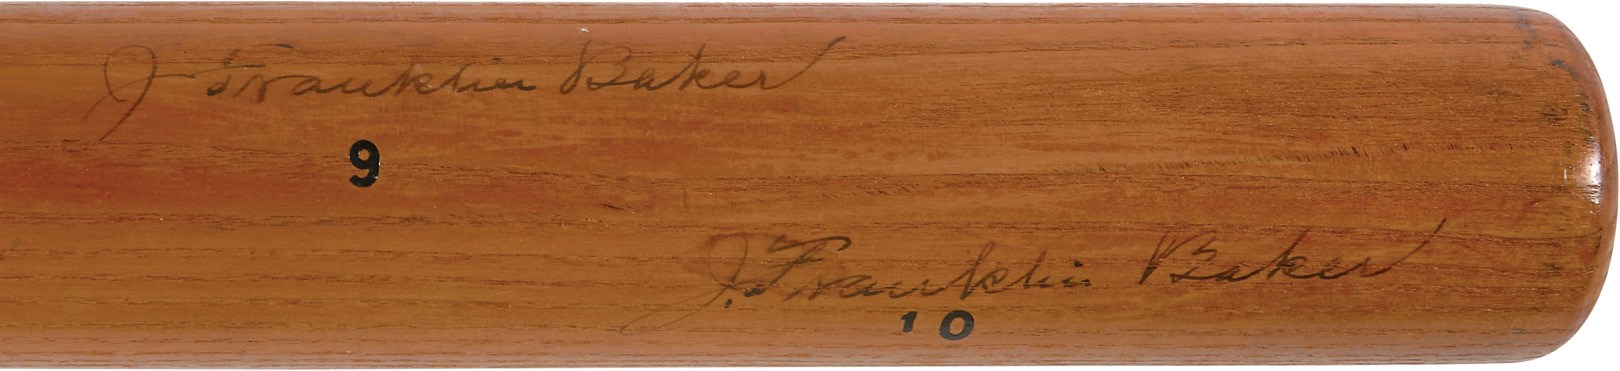 Baseball Autographs - Home Run Baker Signed Bat (Signed 4 Times! PSA)